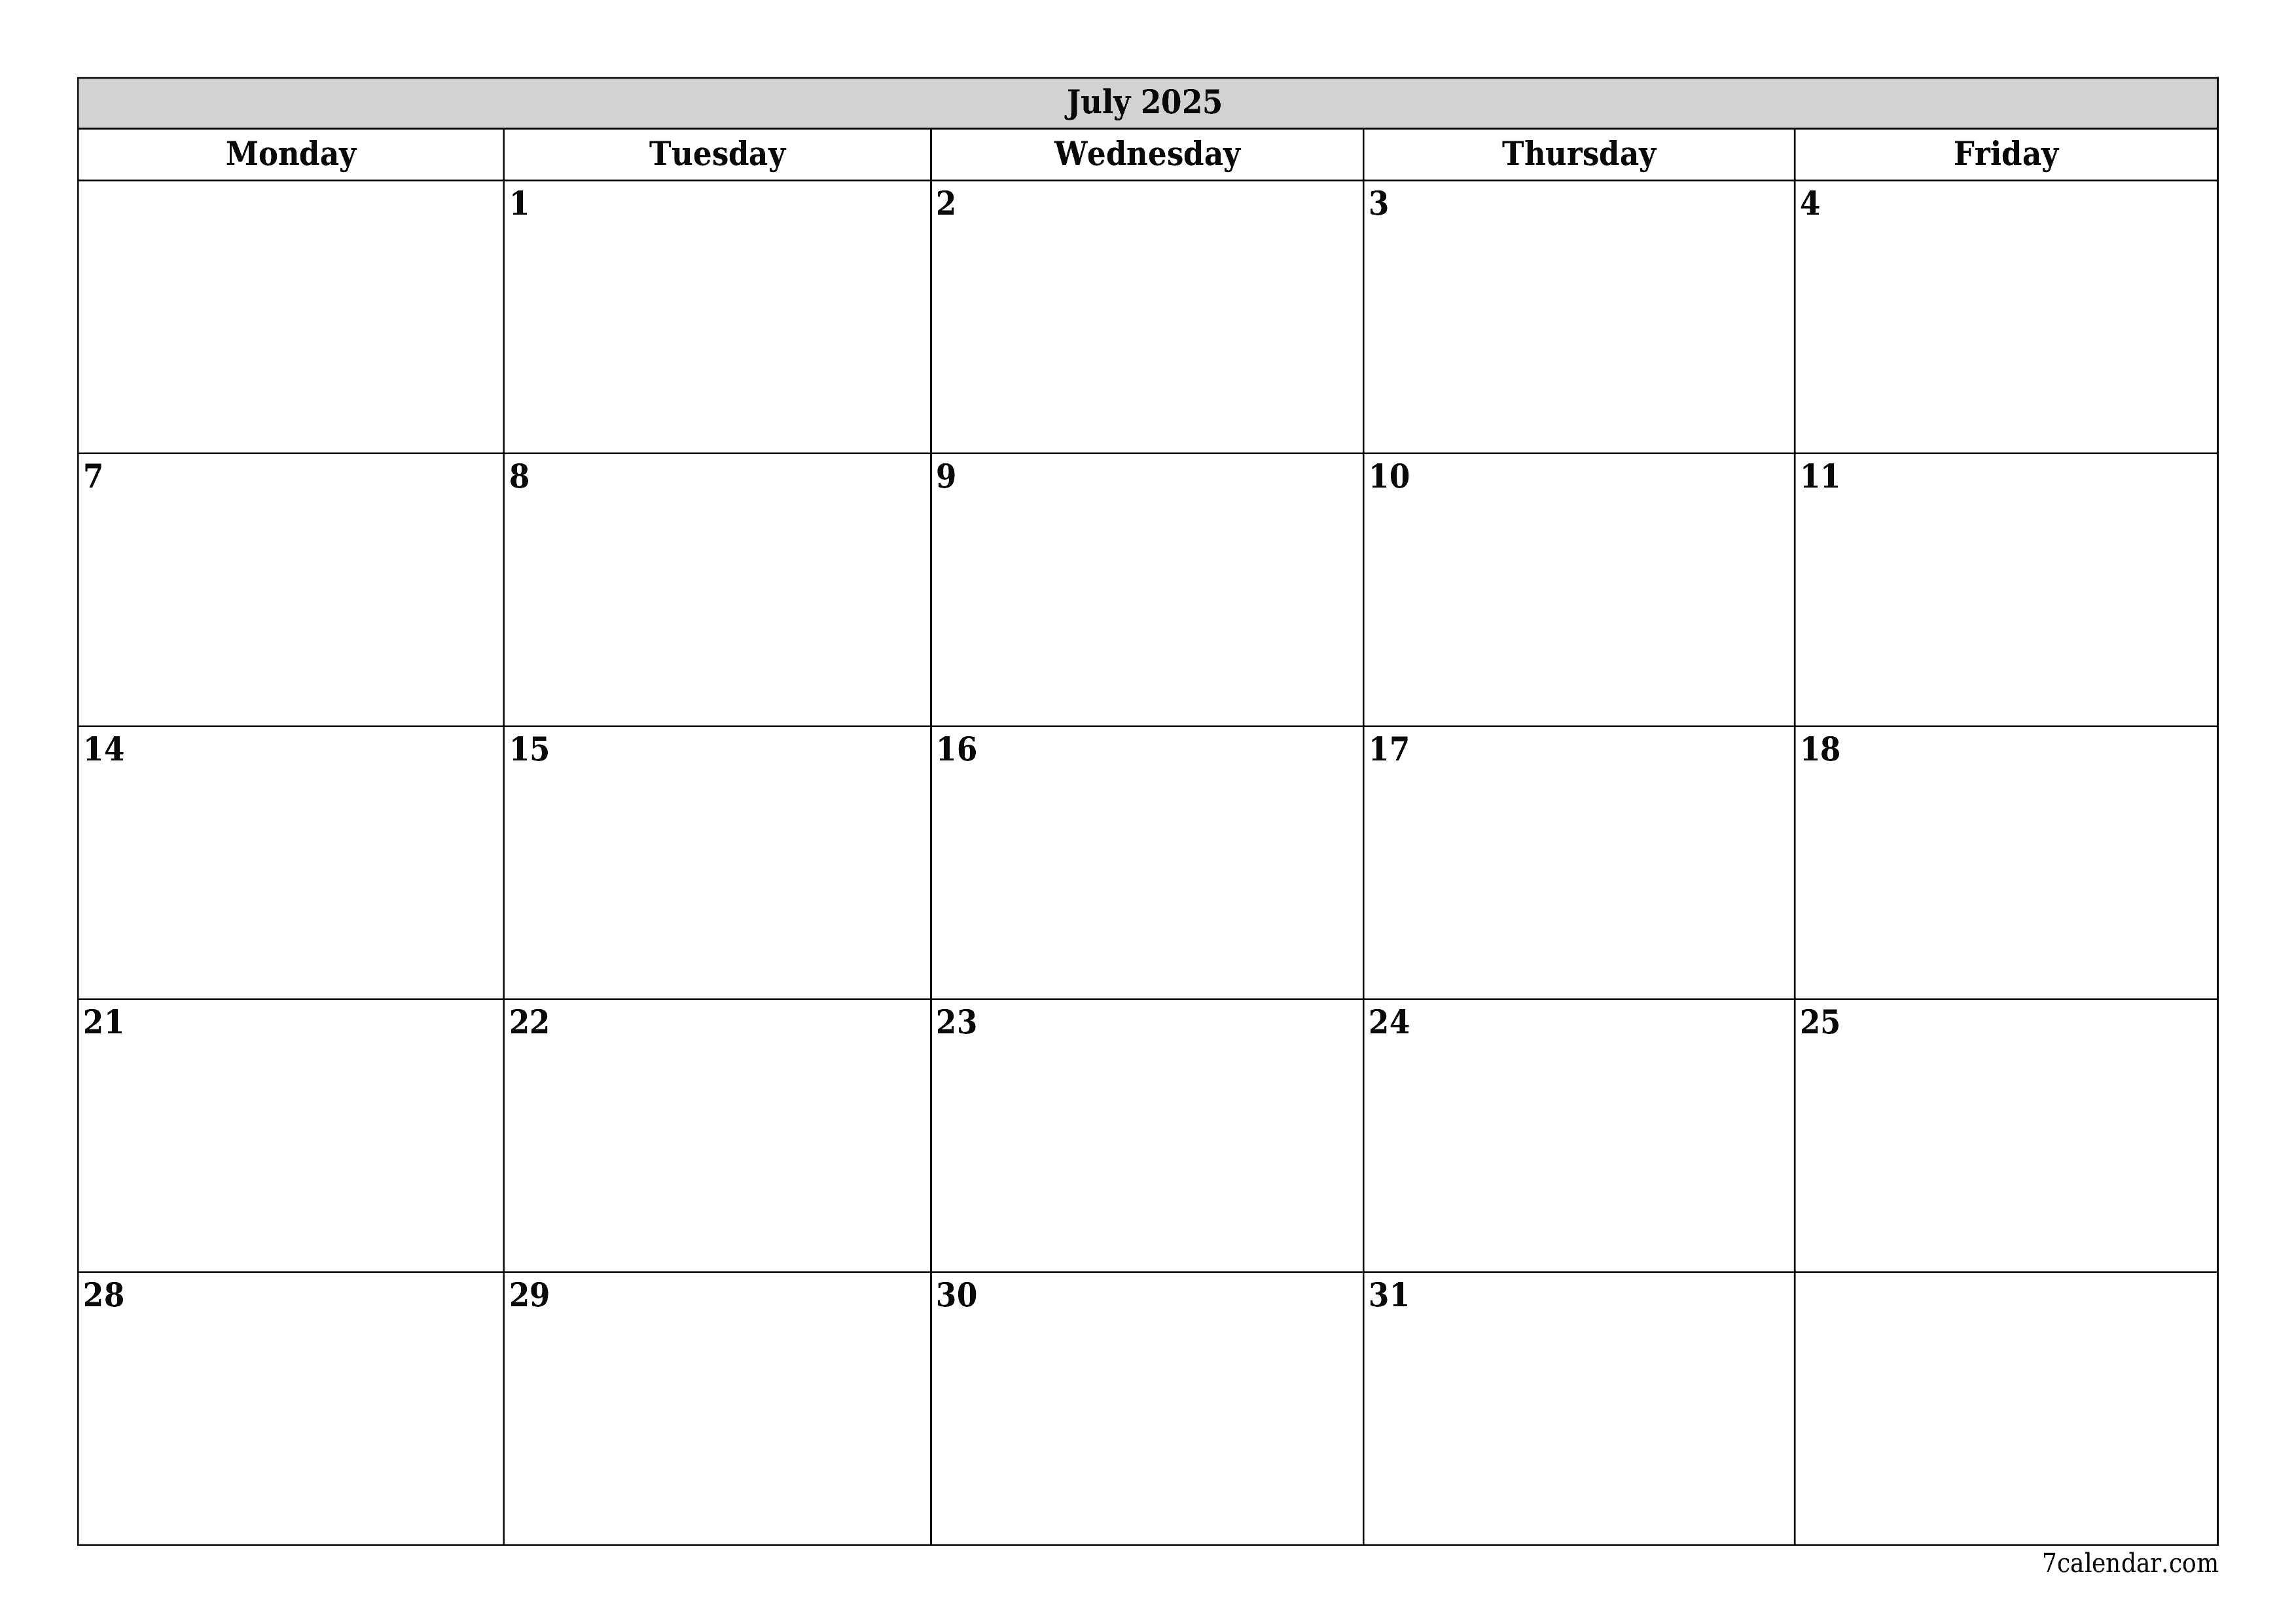 Blank calendar July 2025